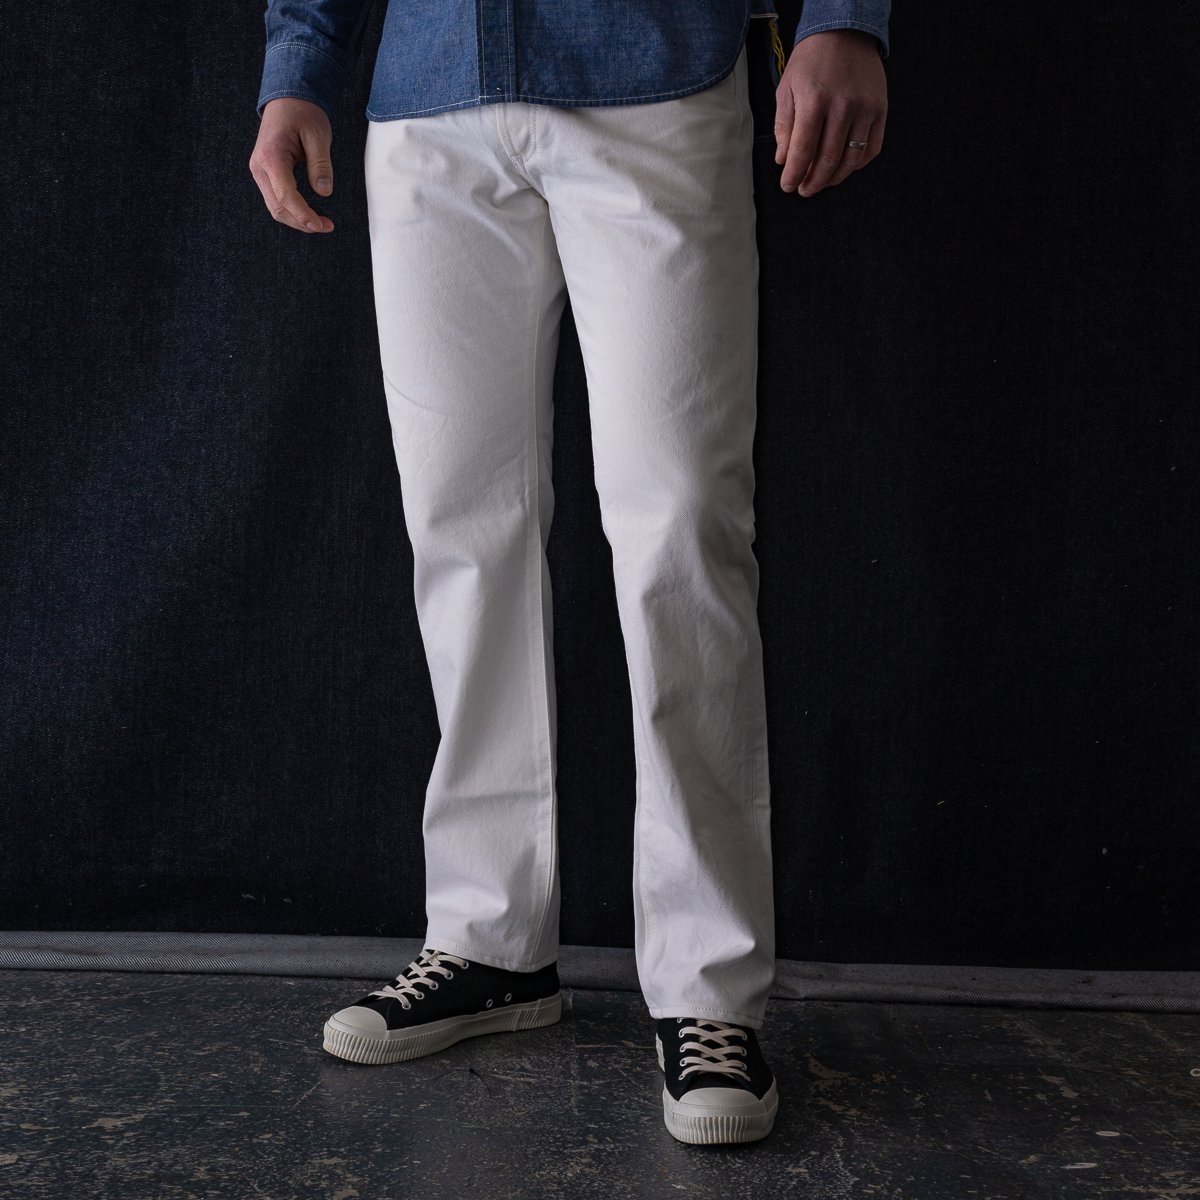 IH-888-WT 13.5oz Denim Medium/High Rise Tapered Cut Jeans - White - 4